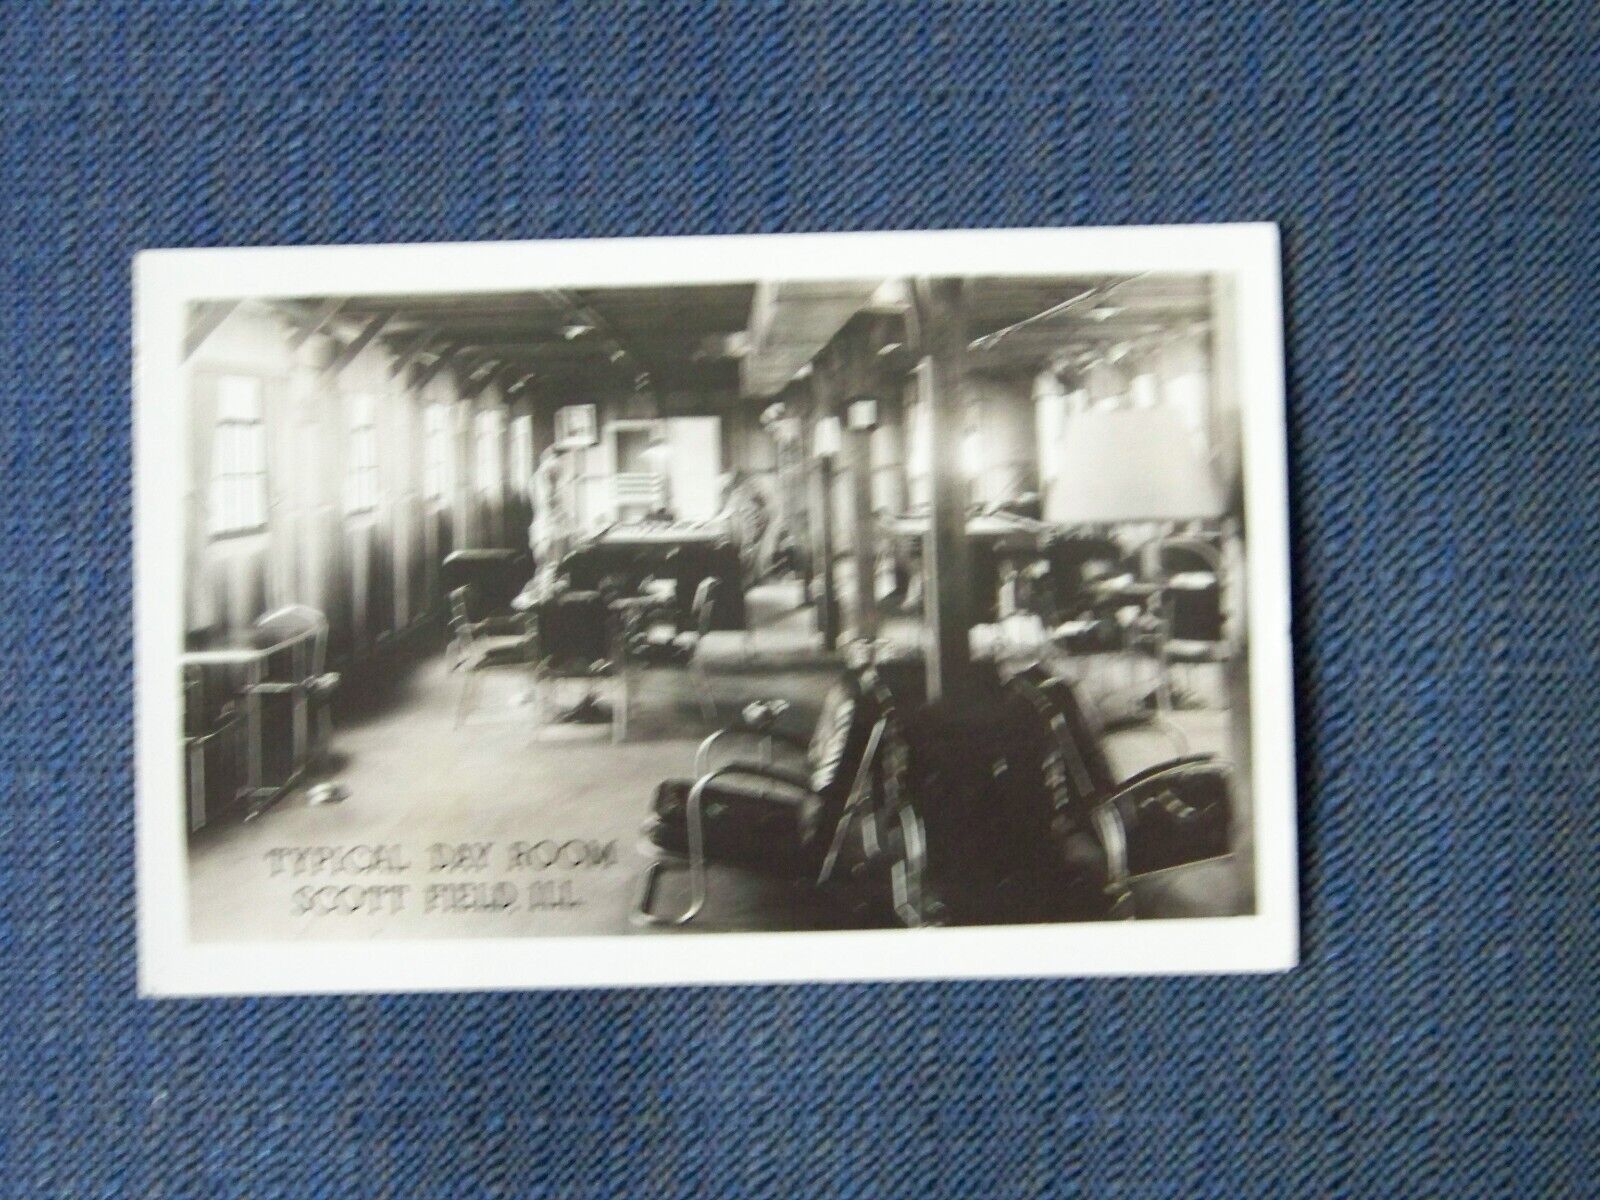 Scott Field Illinois IL RPPC Photo Day Room 1943 Shipping Orders Message